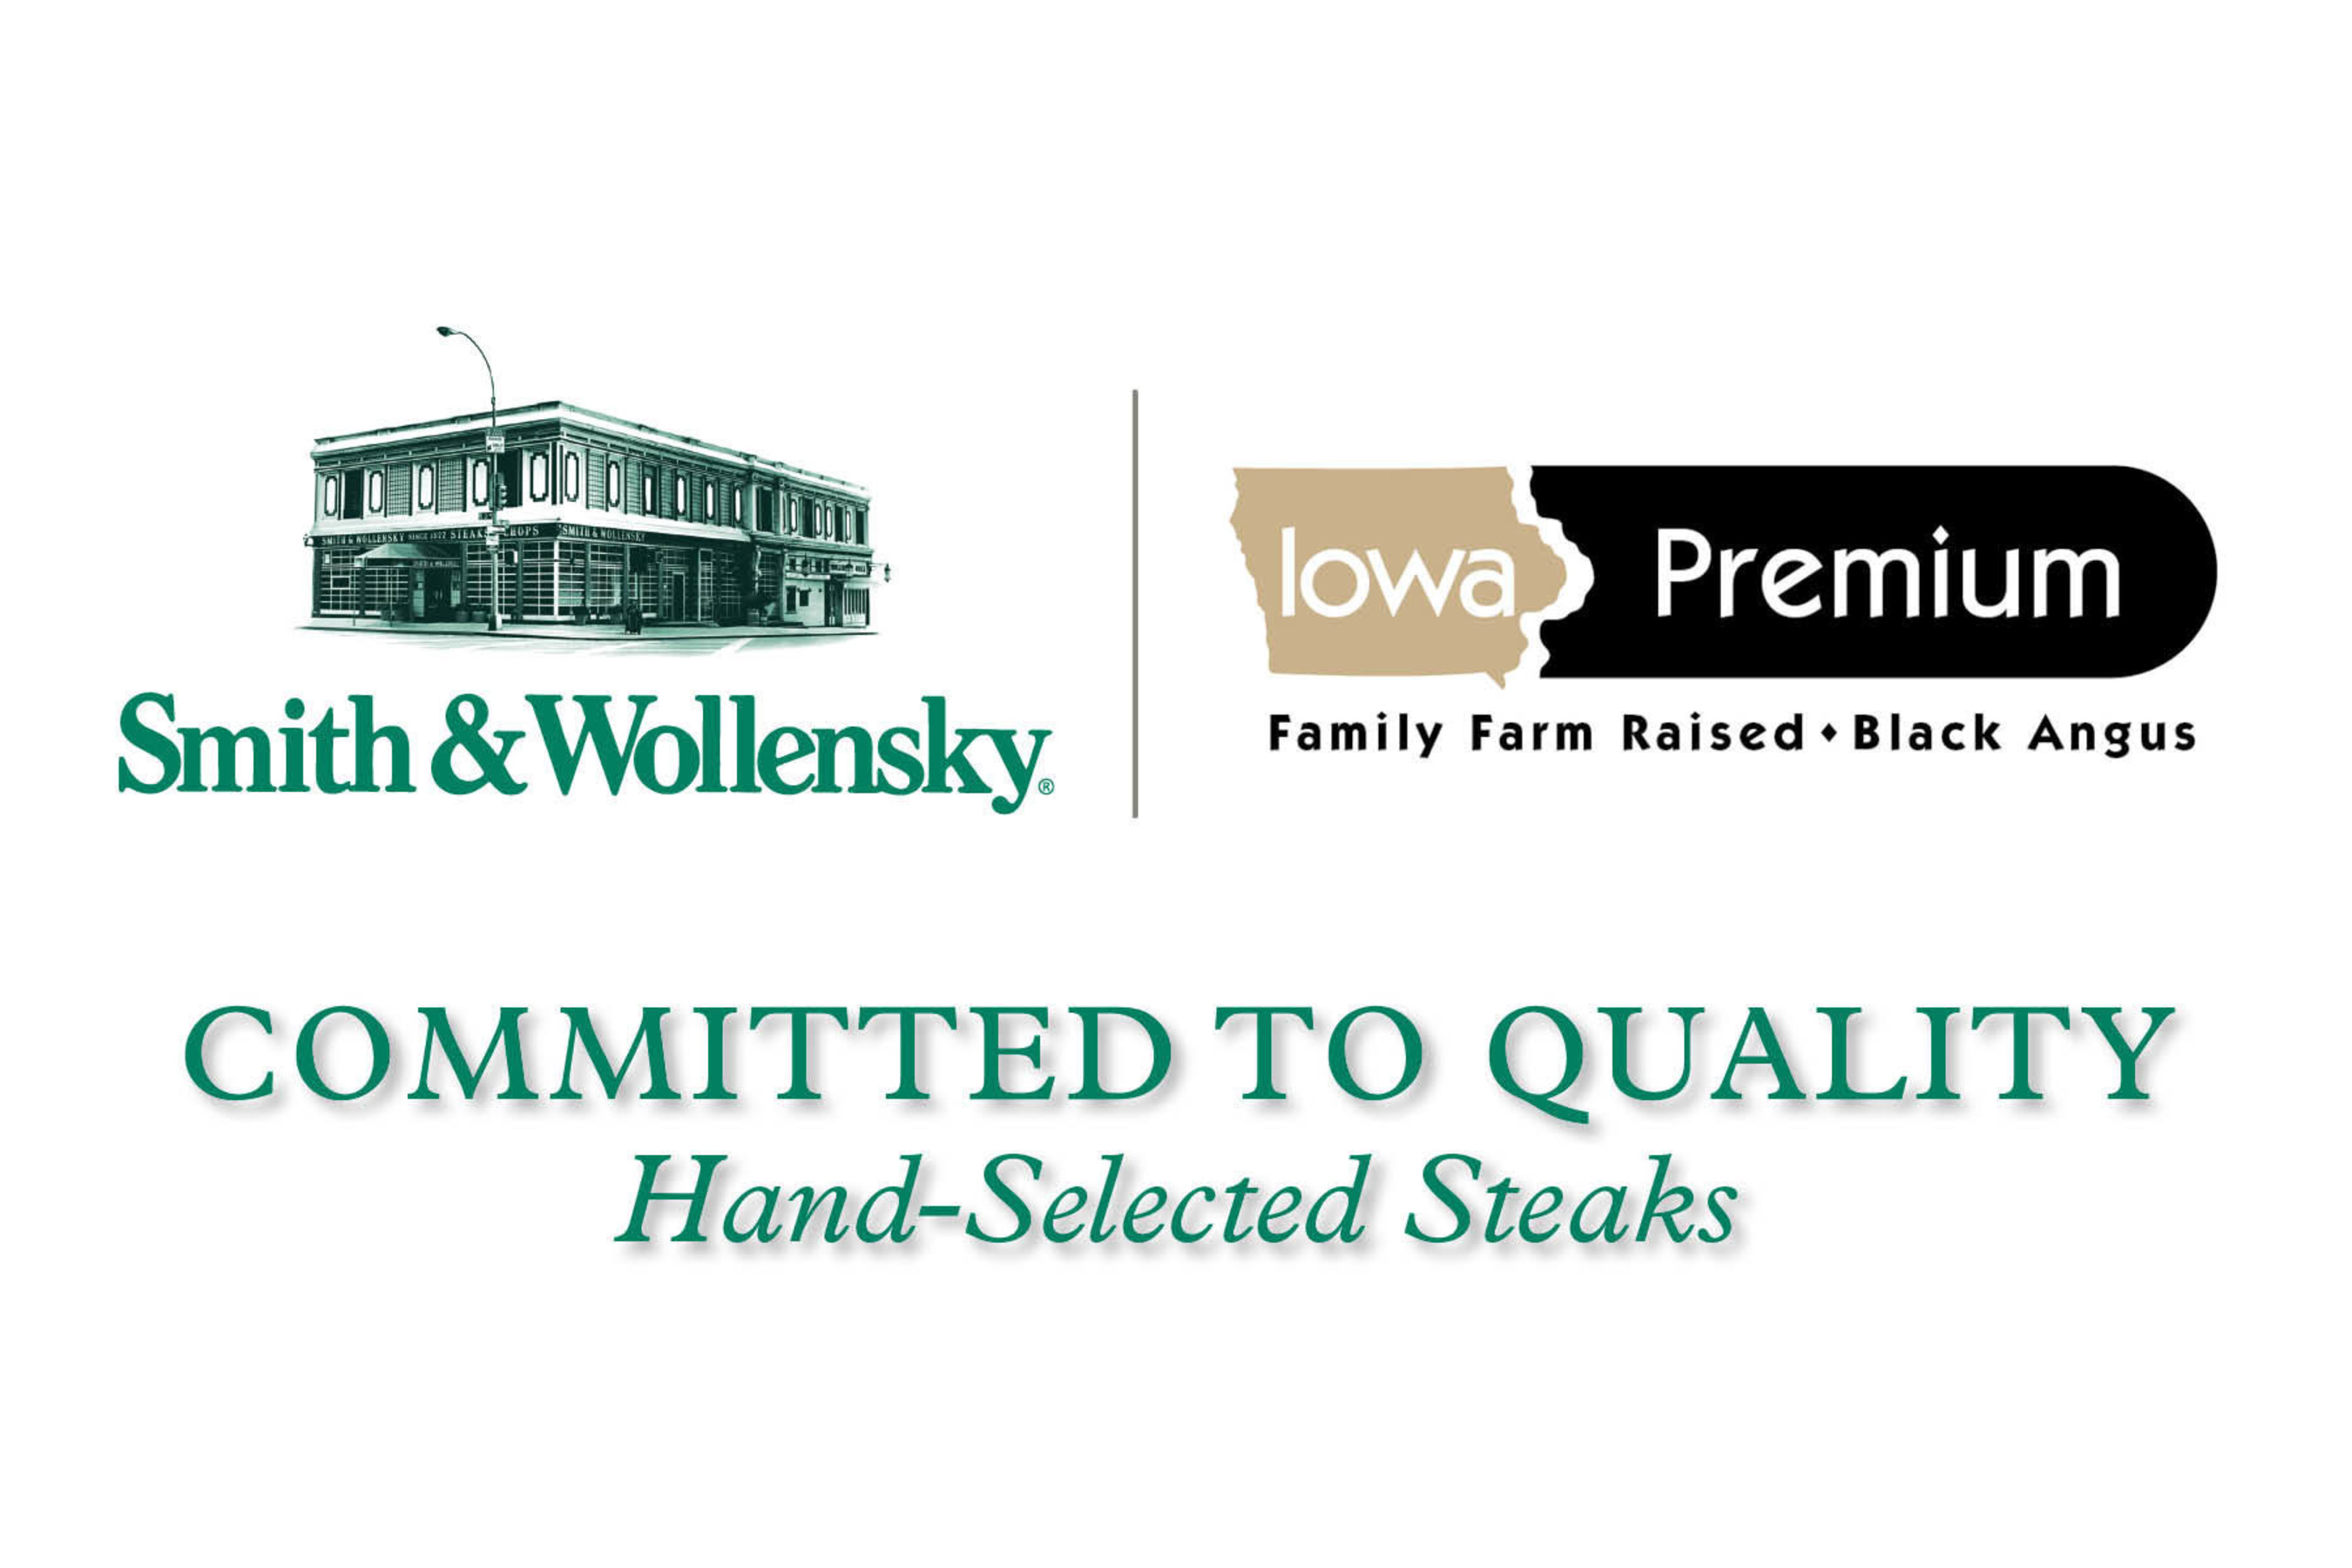 Smith & Wollensky Restaurant Group Partners with Iowa Premium.